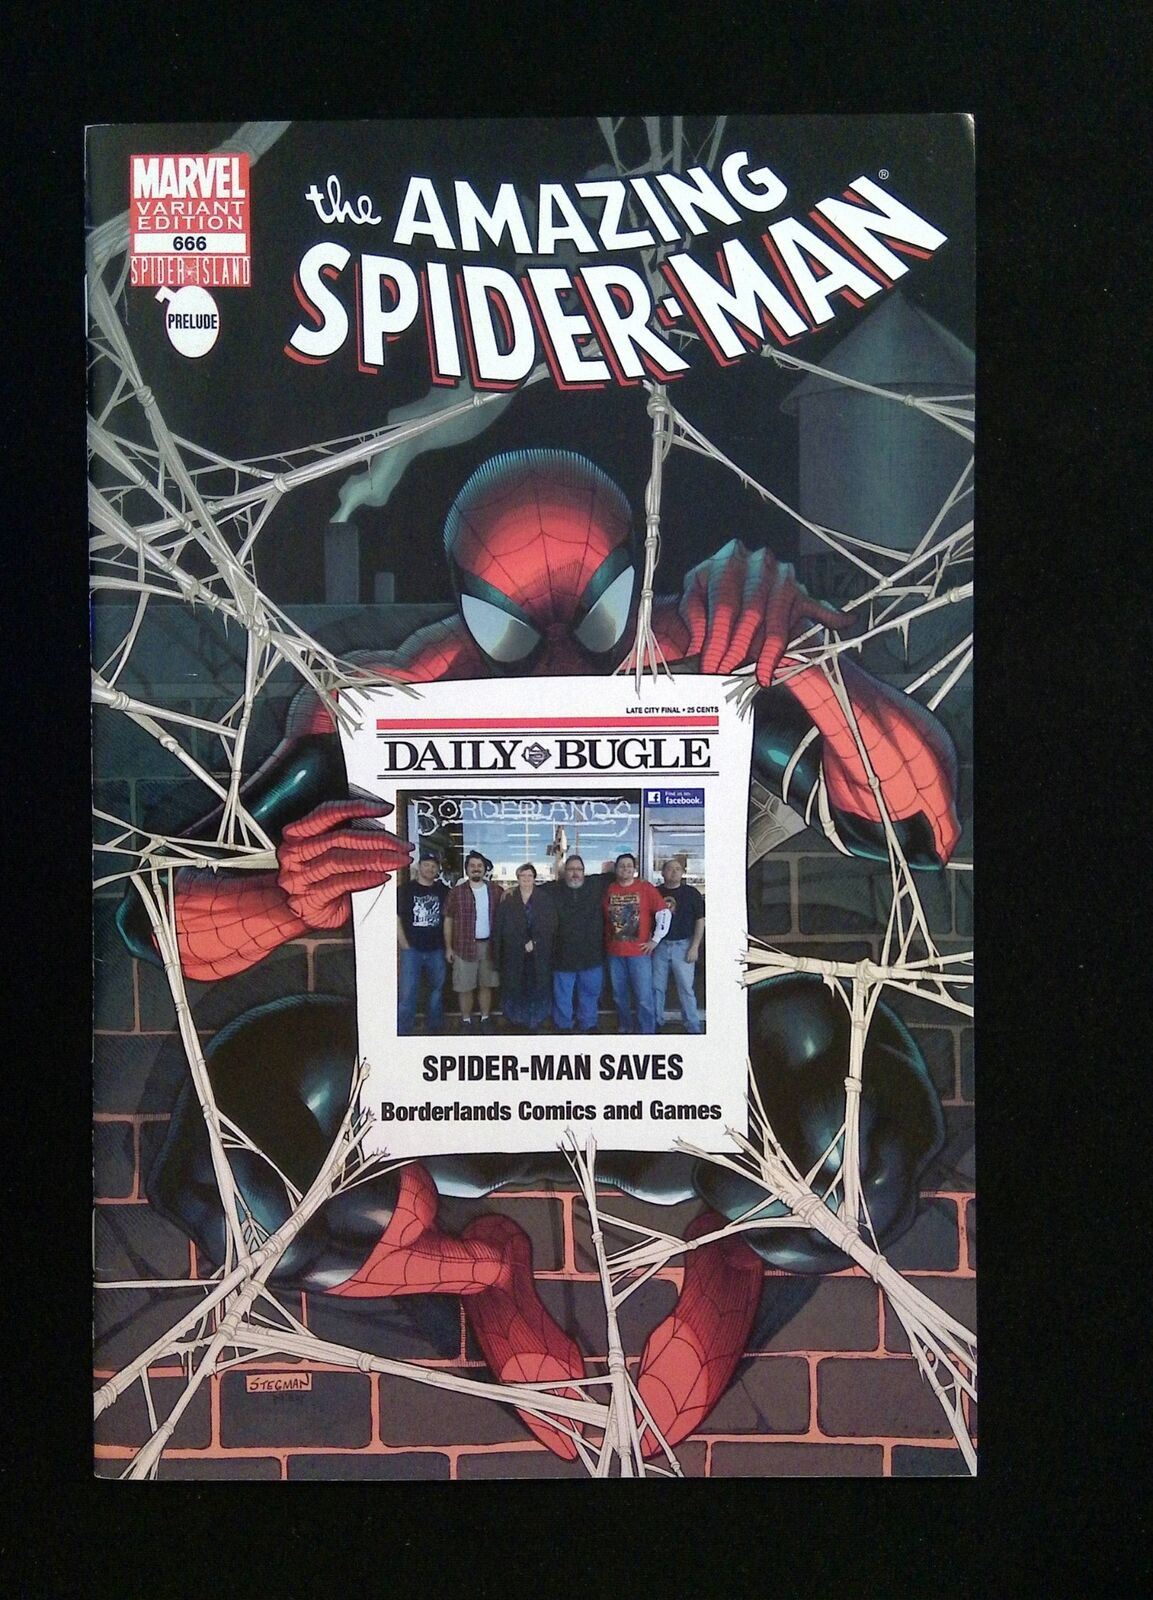 Amazing Spider-Man #666JIMHANLEYS (2ND SERIES) MARVEL Comics 2011 VF+